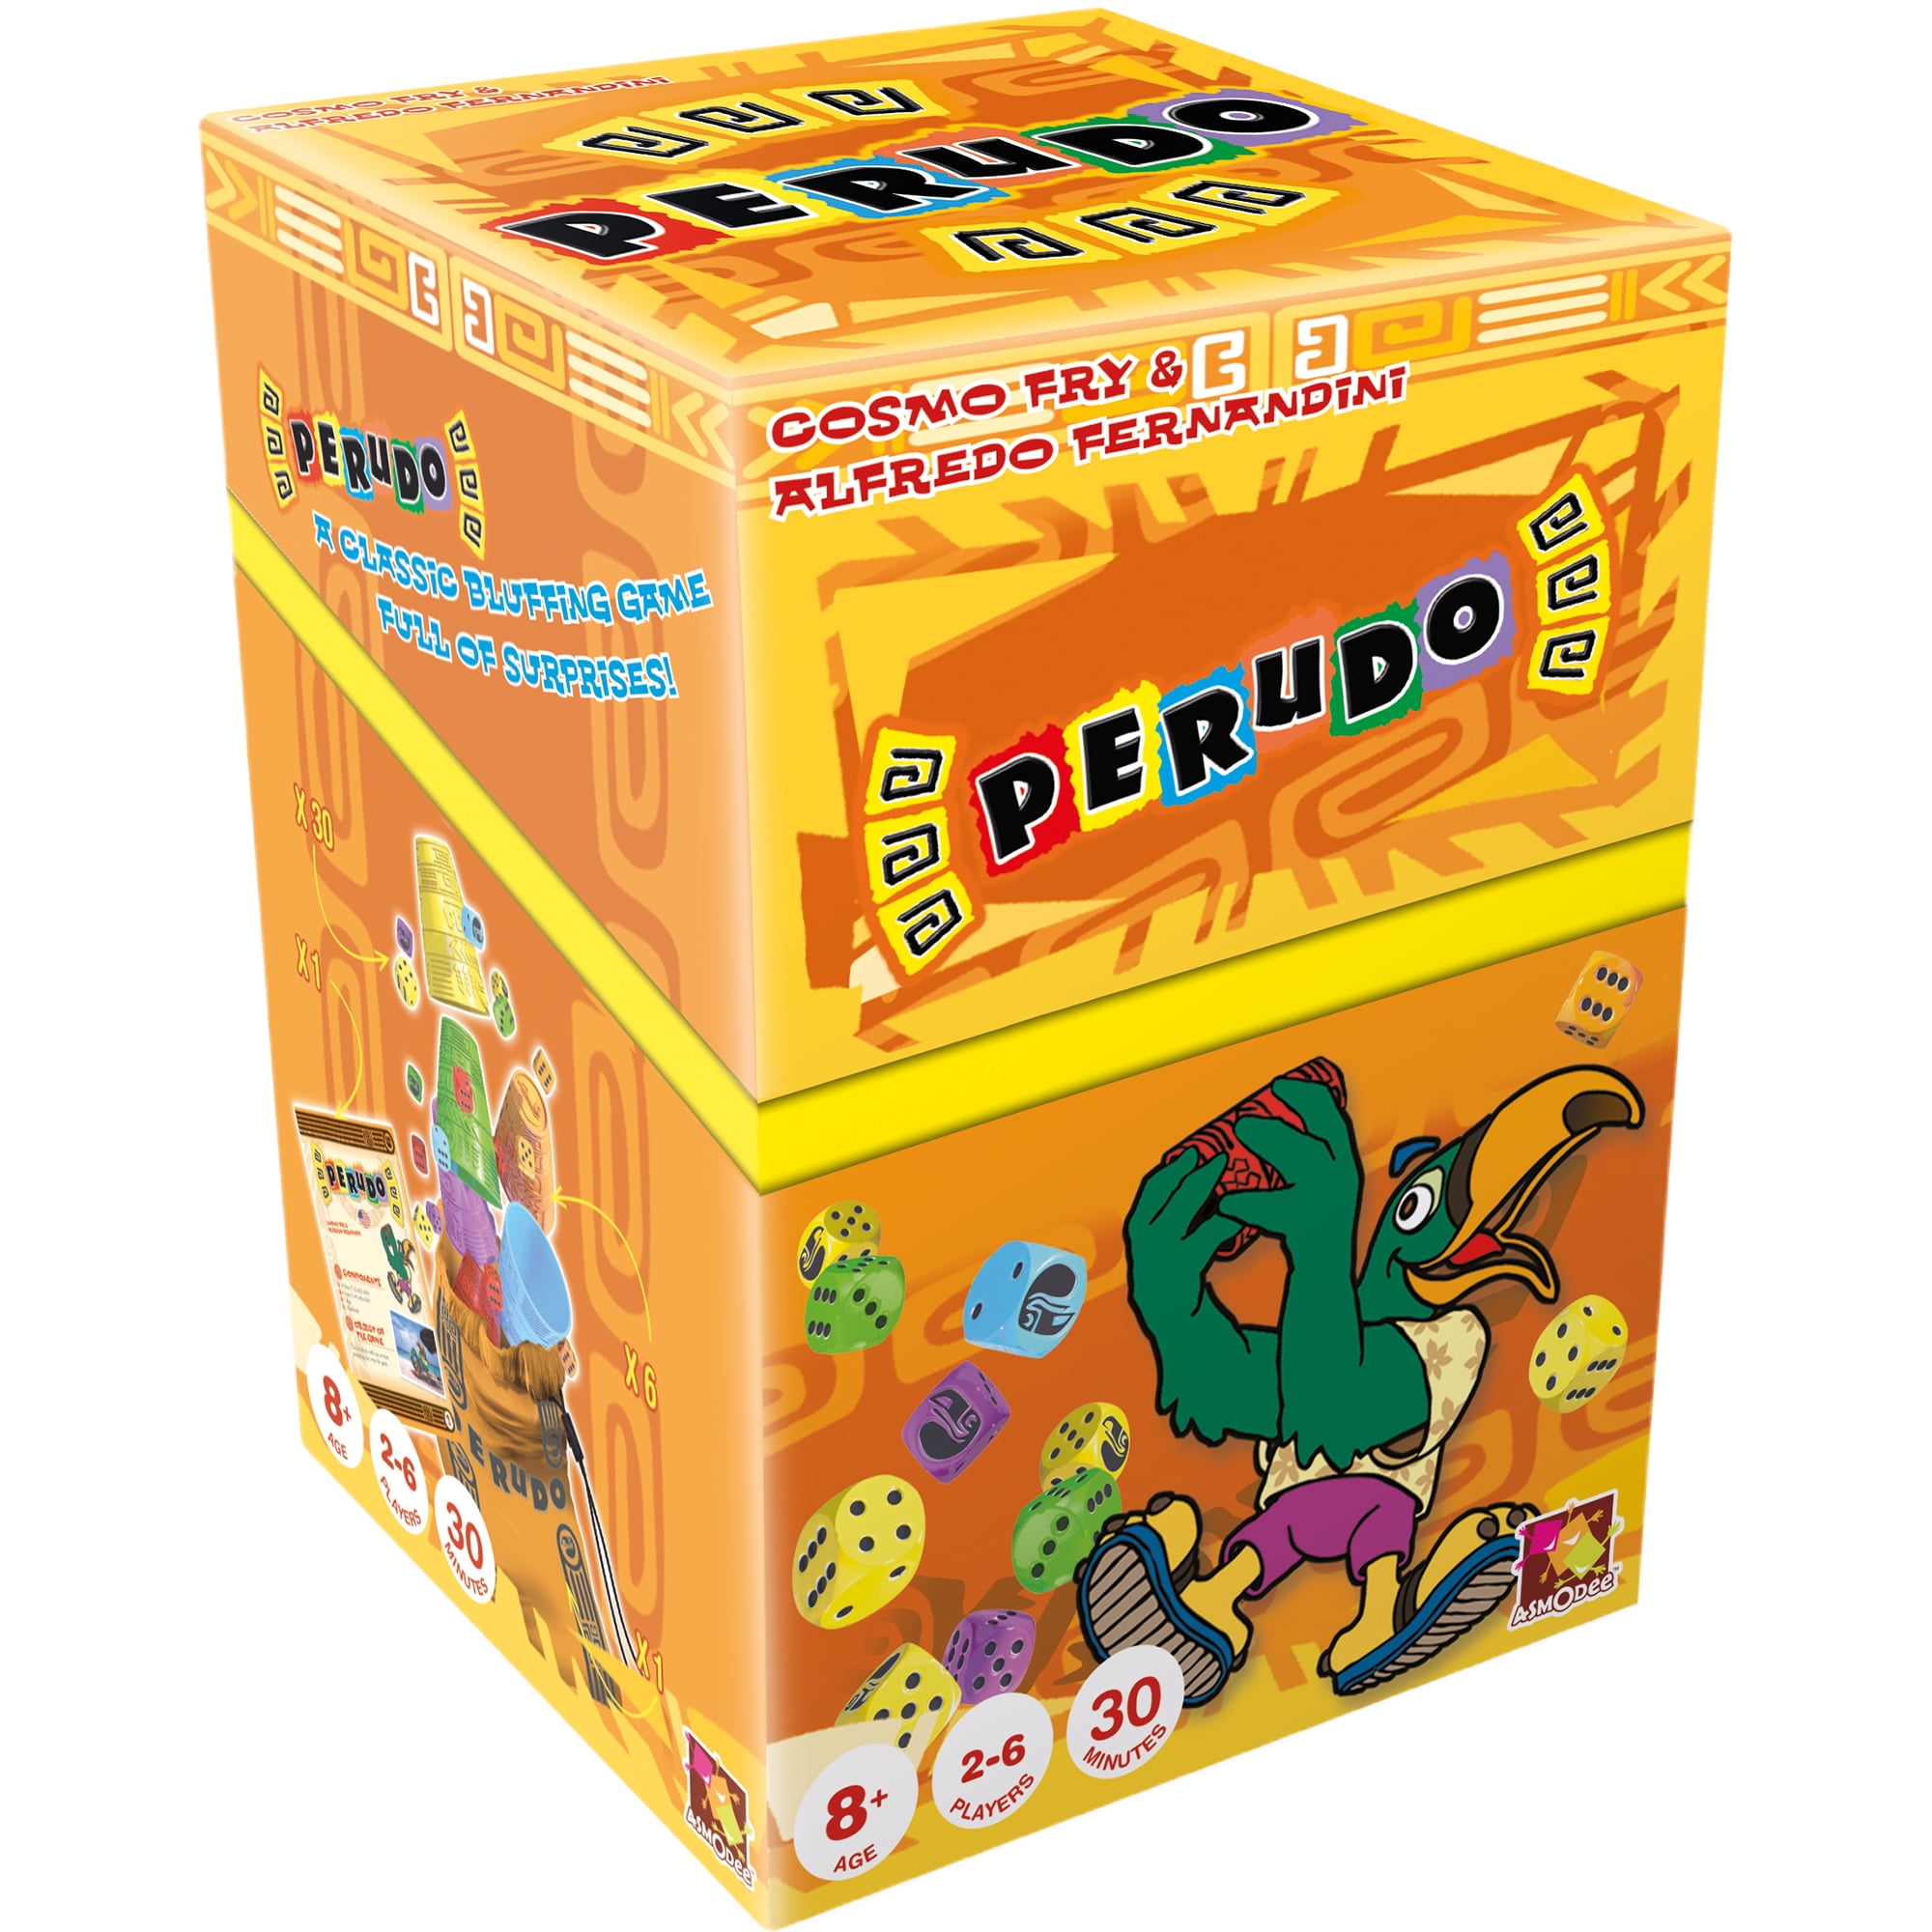 Perudo Game Set with Box - Ivory